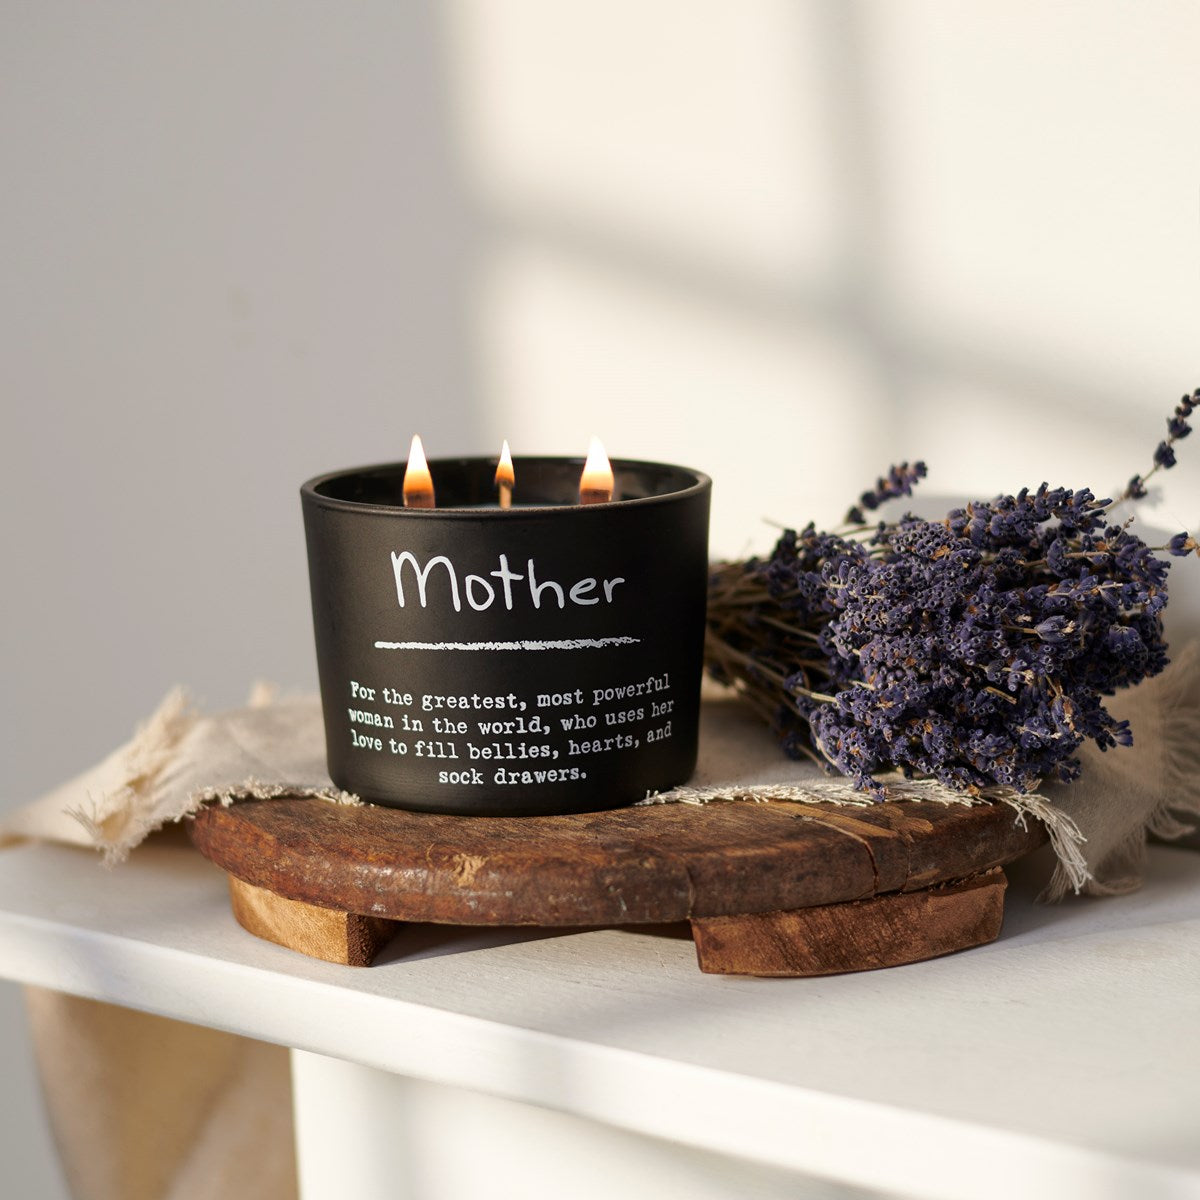 Mother Wood Wick Jar Candle Lavender Scent 14 oz